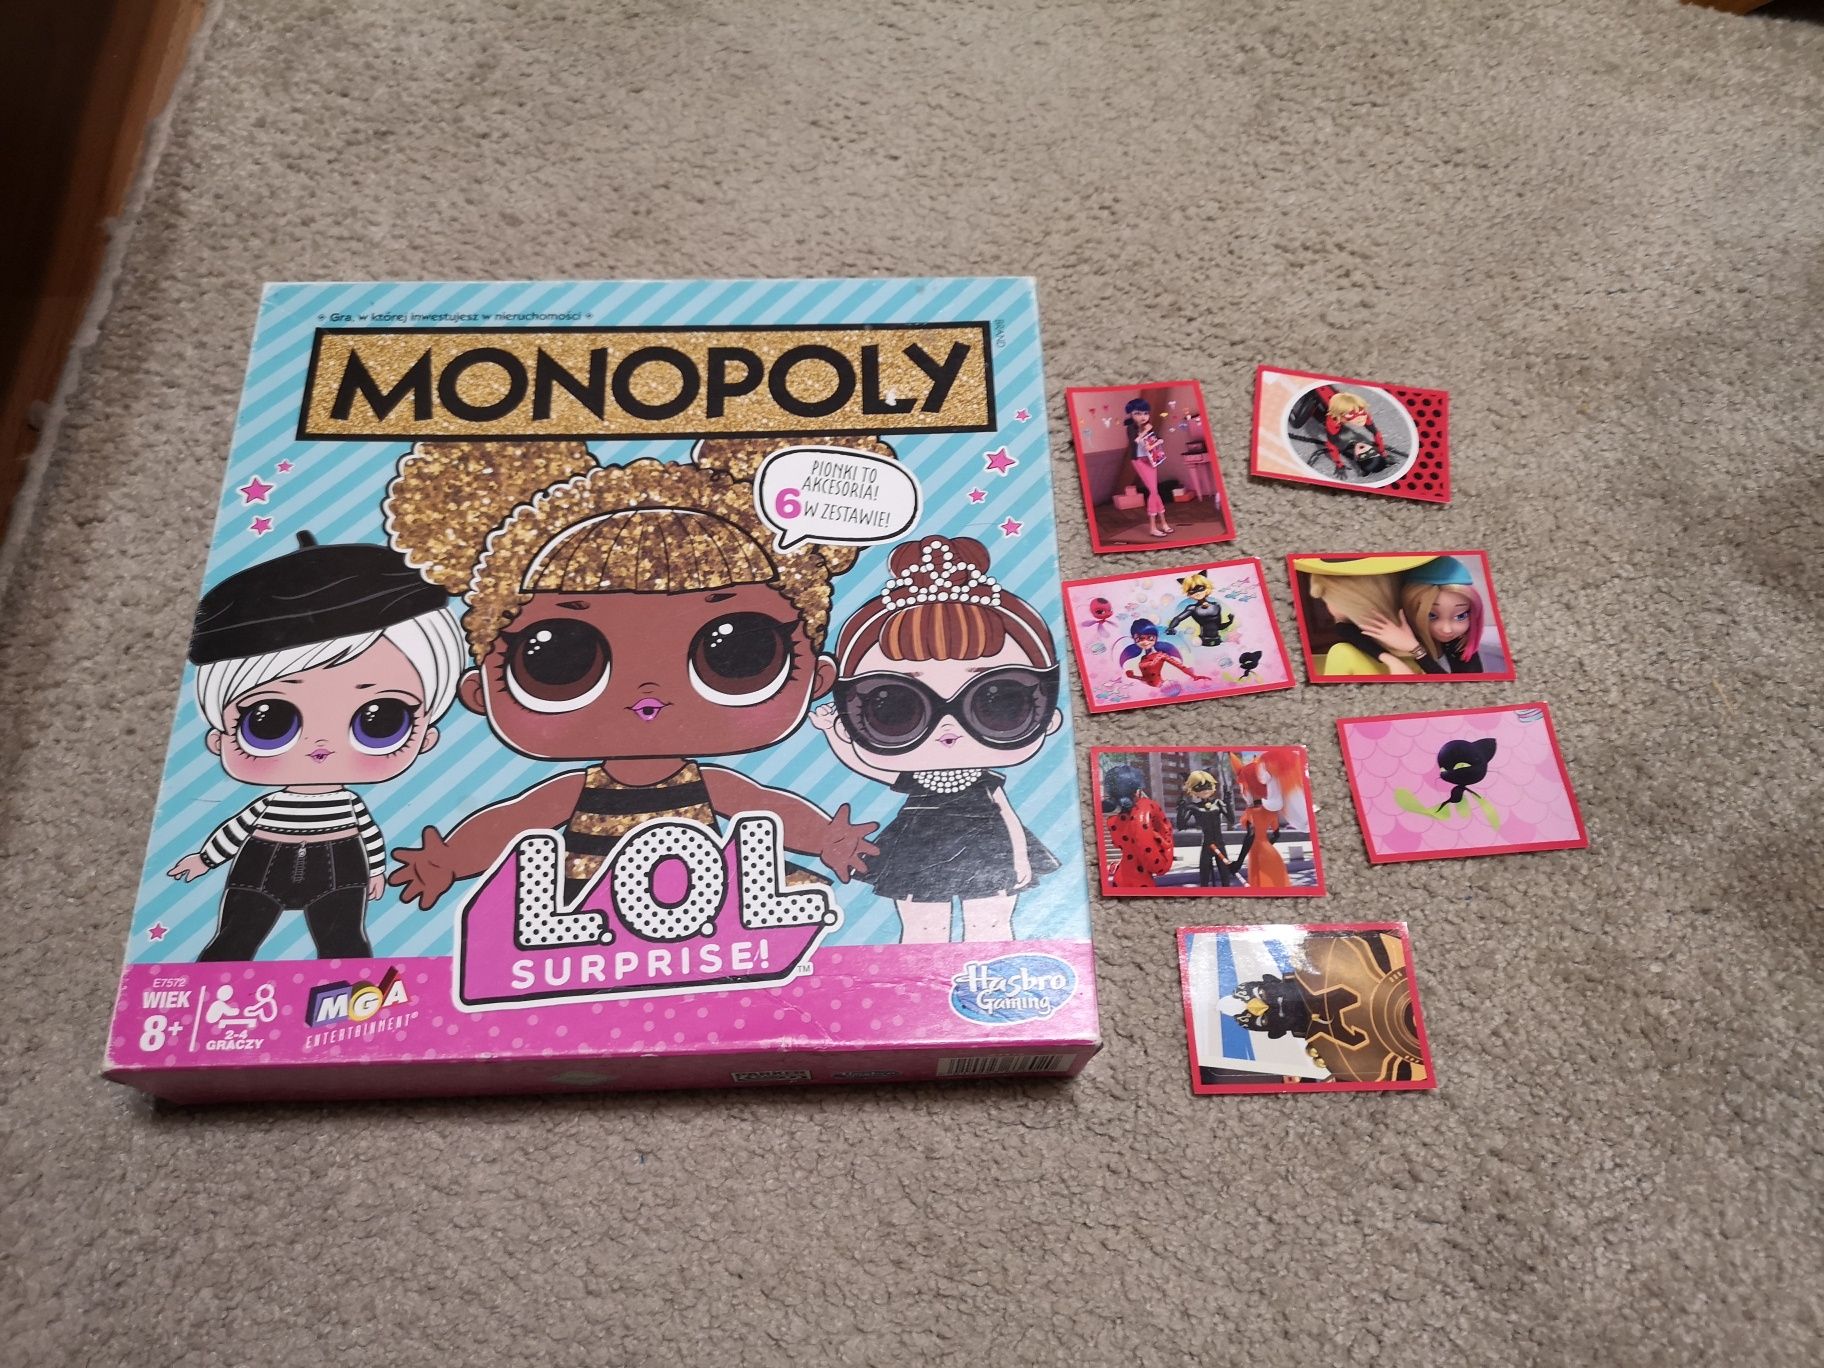 Gra Monopoly Lol suprise 8+ Hasbro. Gratis naklejki 7szt.Biedronkaikot